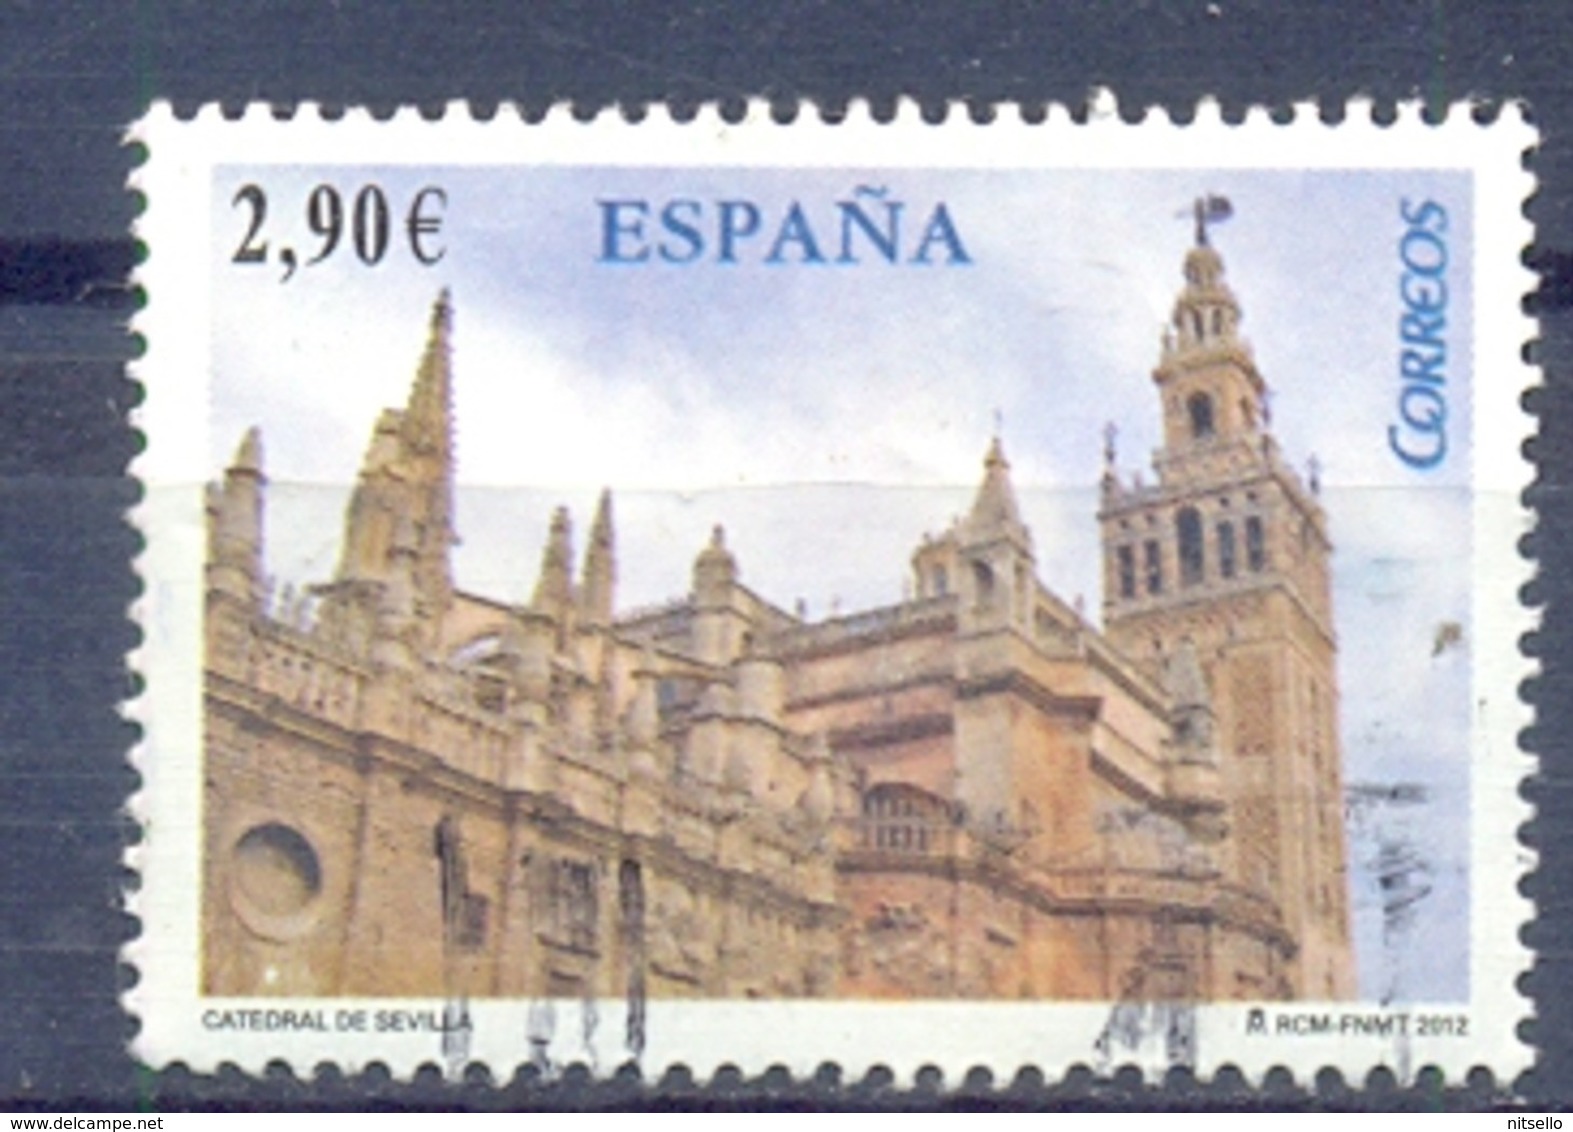 LOTE 2014 /// (C130) ESPAÑA 2012 ¡¡¡ OFERTA - LIQUIDATION !!! JE LIQUIDE !!! - Used Stamps